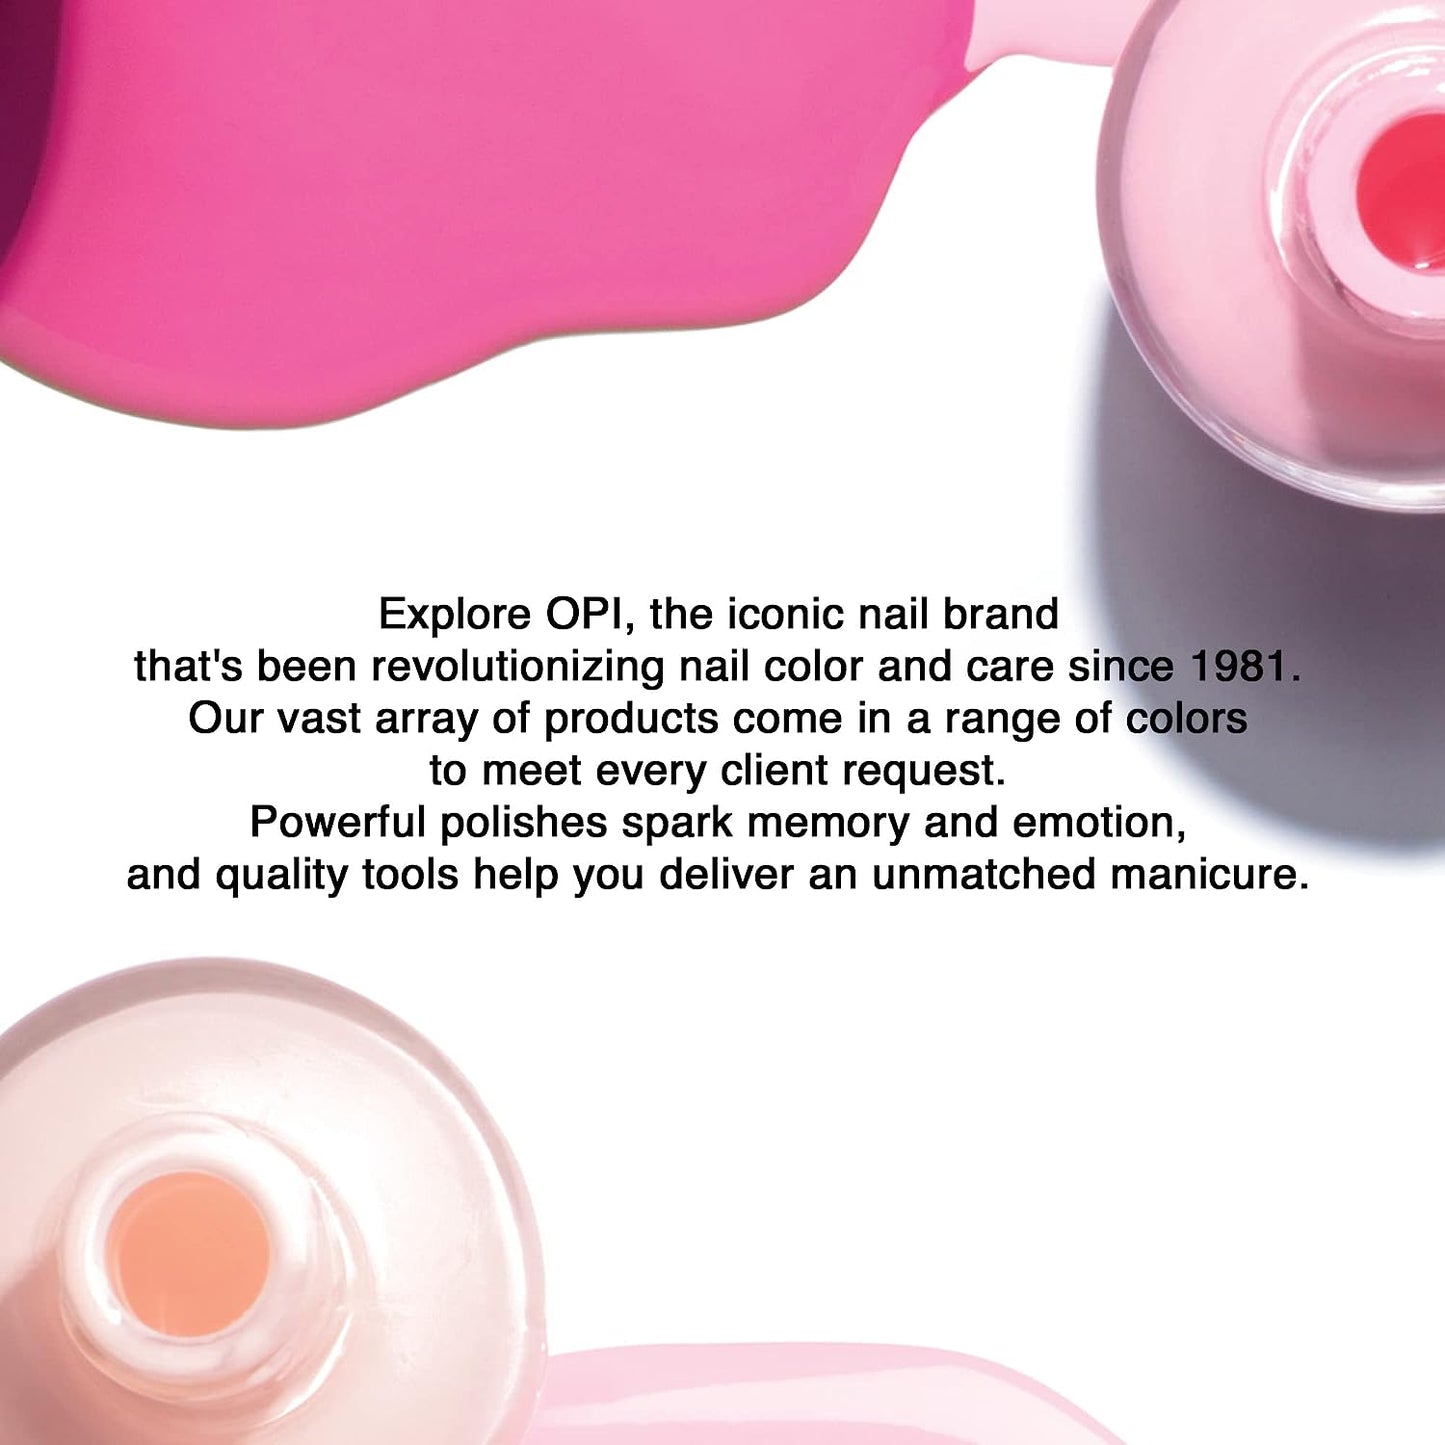 OPI Infinite Shine 2: Bubble Bath Sheer Pink Crème Nail Lacquer - Long-Wear Elegance, Chip Resistance, and Gel-Like Shine, 0.5 fl oz